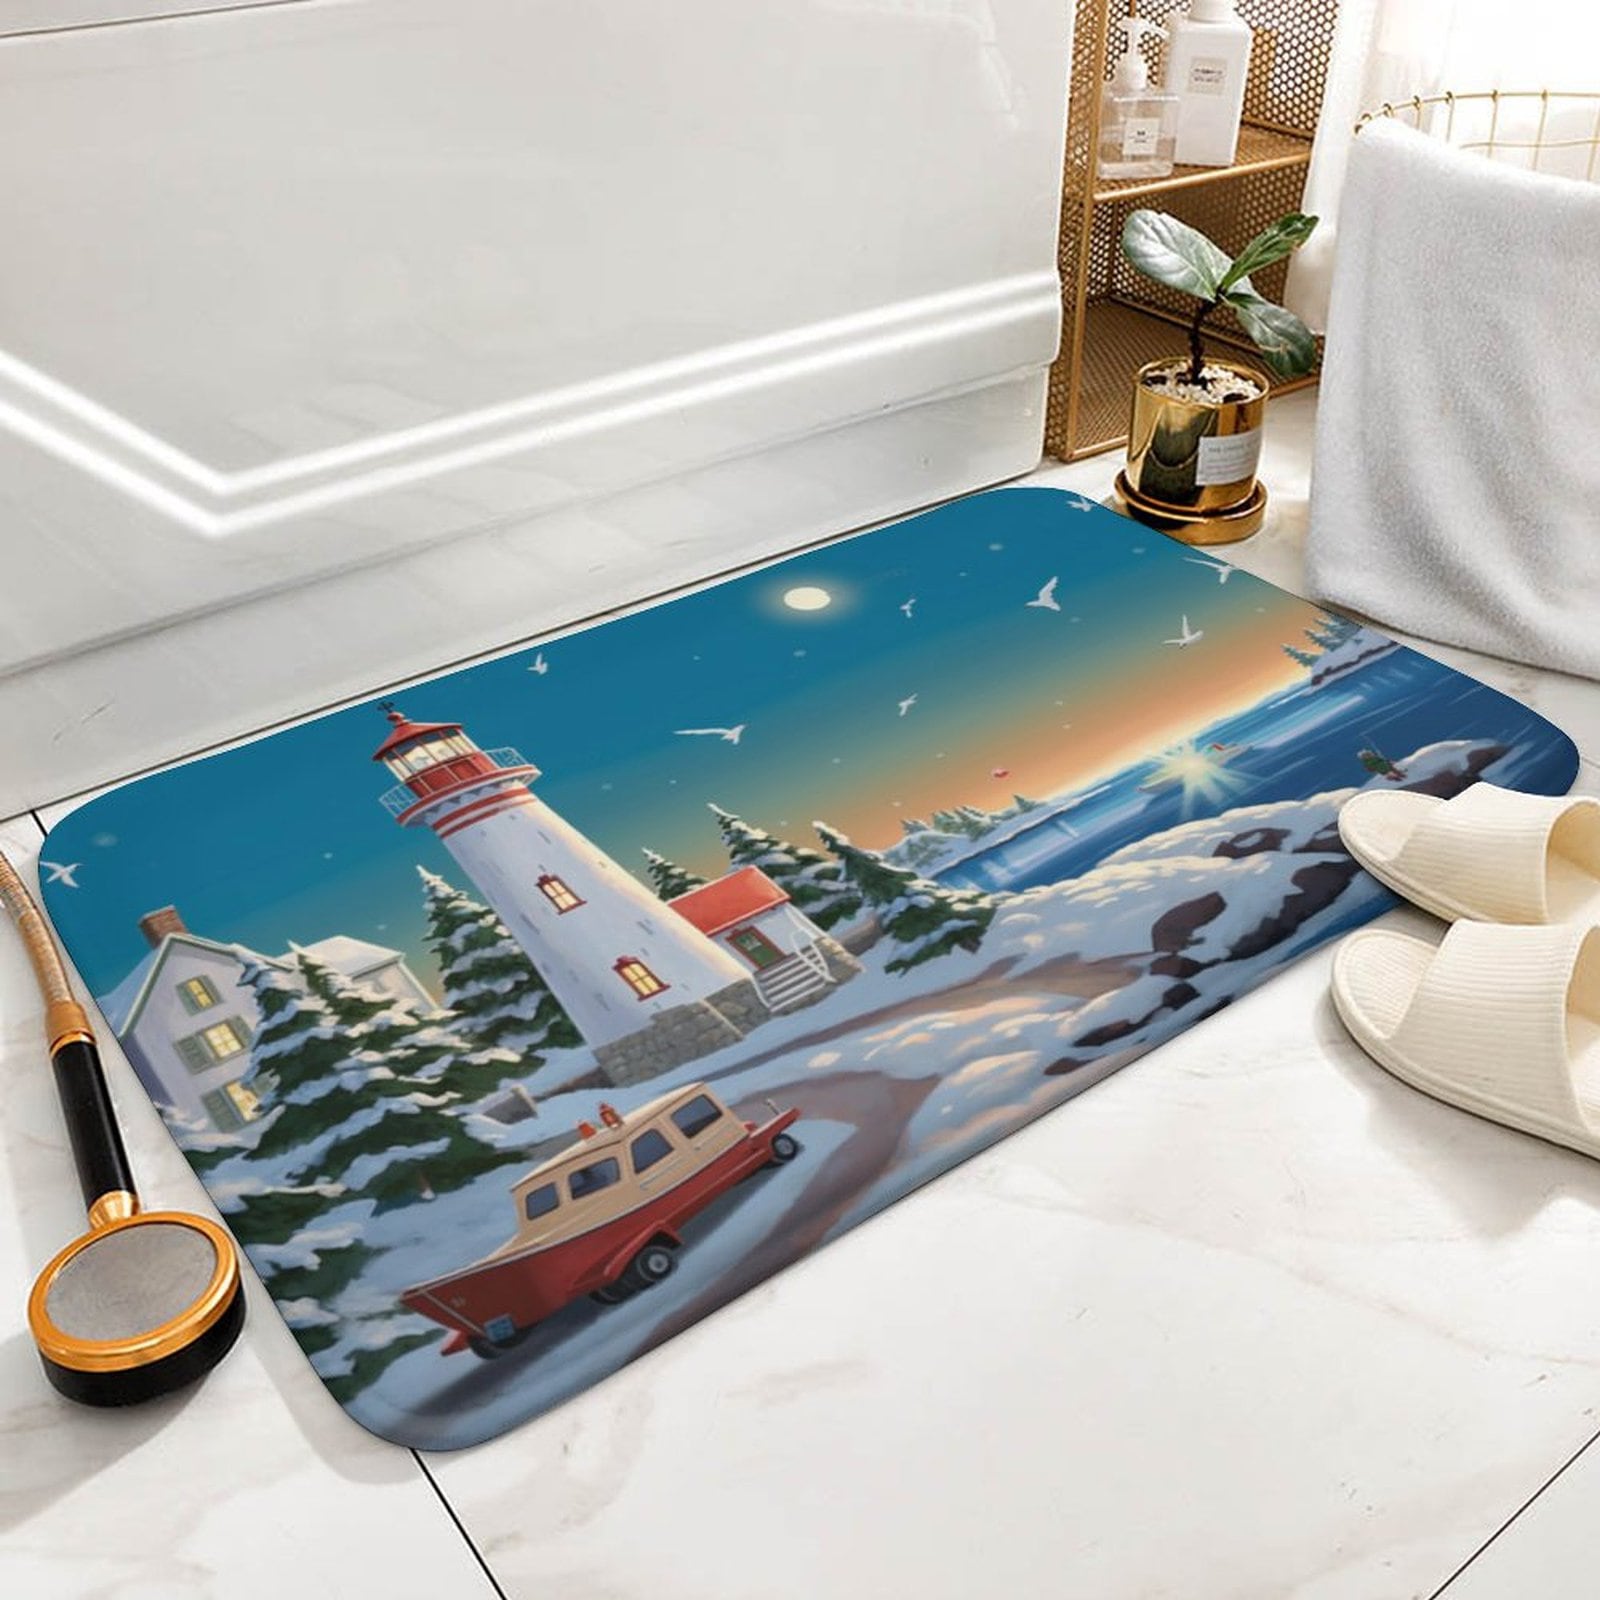 4 Piece Lighthouse Oceans Shower Curtain Set with Blue Ocean Beach Bathroom  Rugs Clearance Contour Floor Mat Toilet Lid Cover